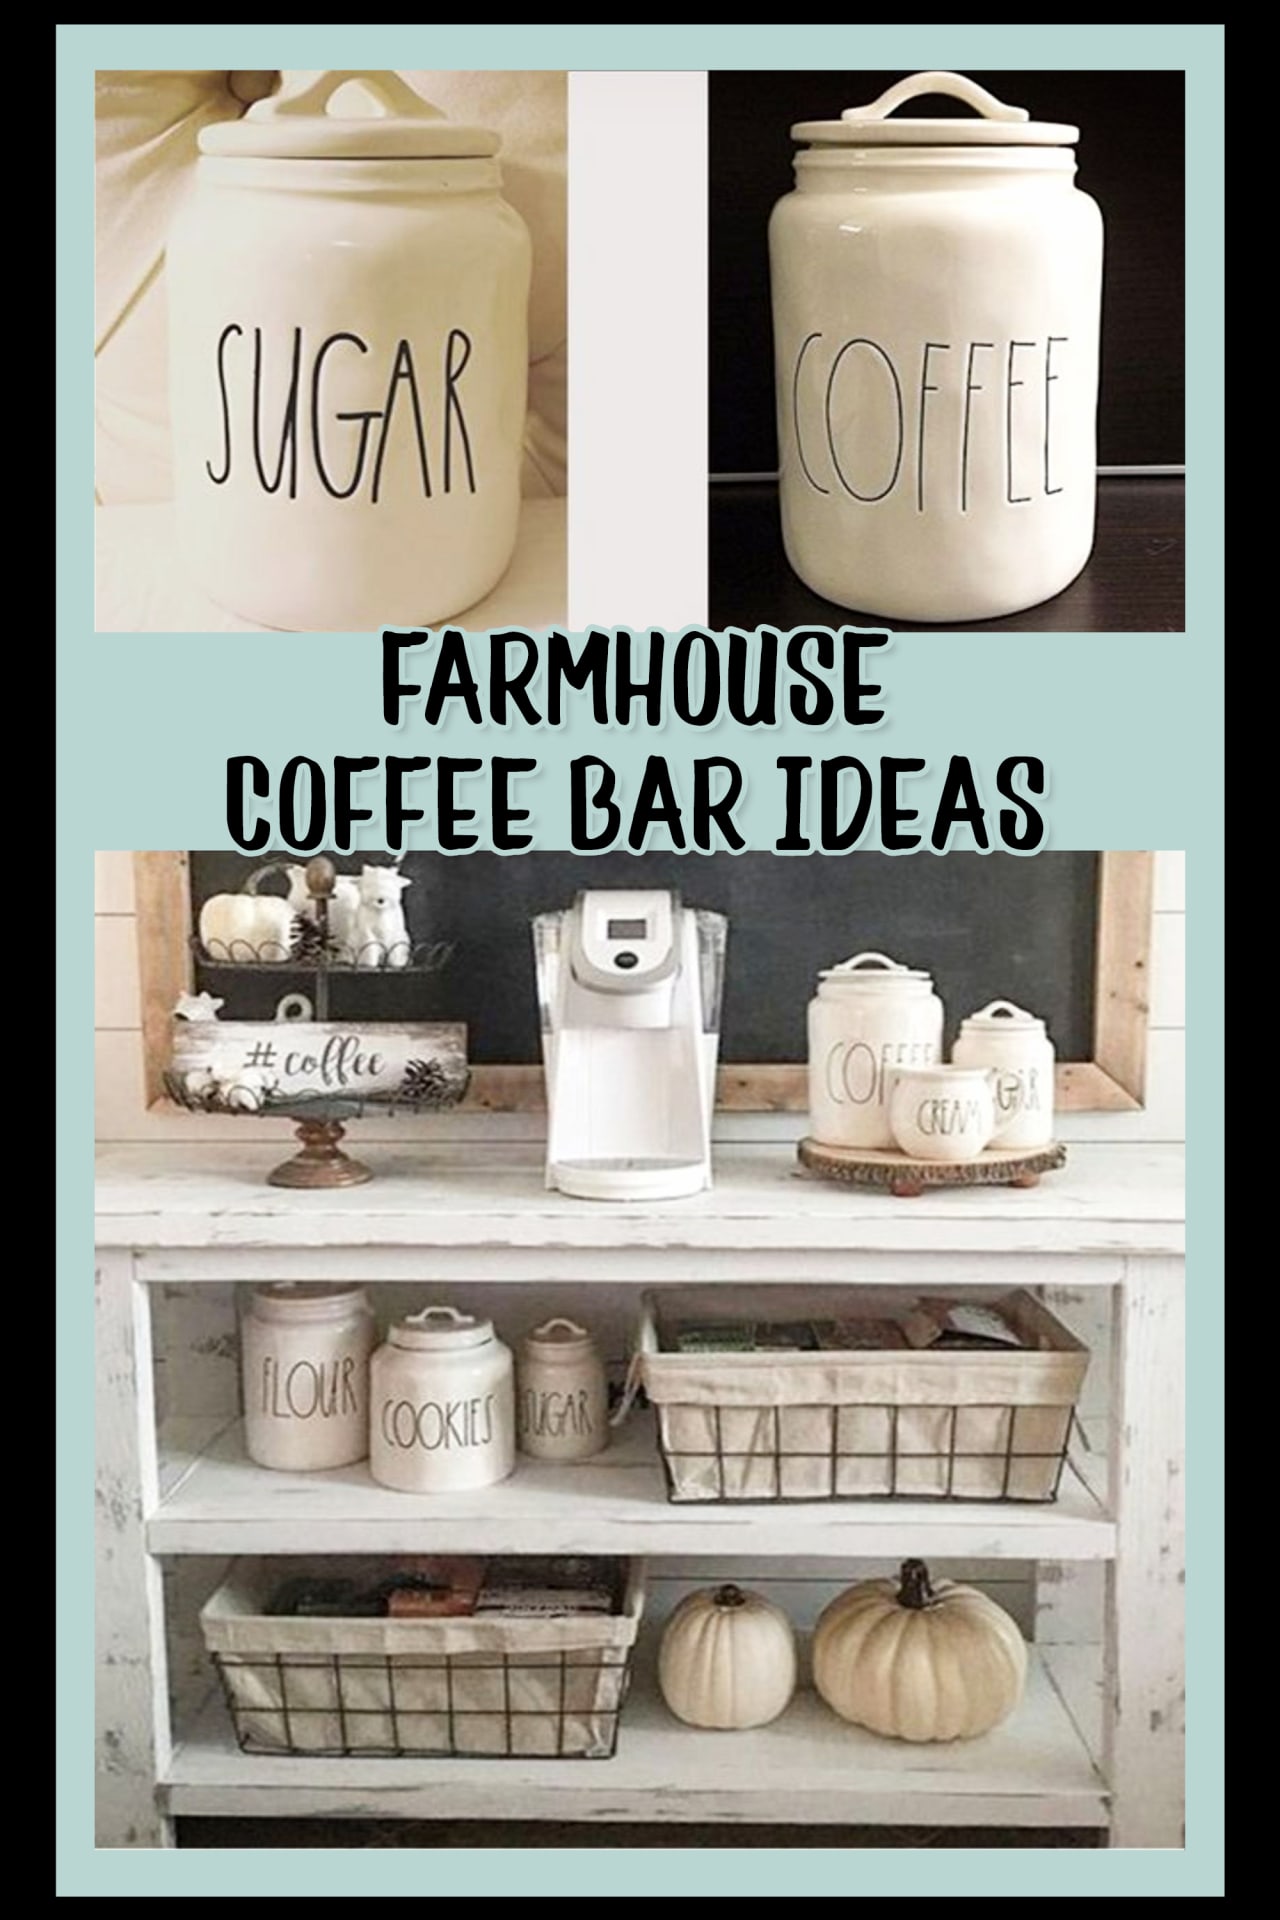 Farmhouse Coffee Bar Ideas! Farmhouse Kitchen Coffee Bar Ideas and Kitchen Canister Sets - Farmhouse Kitchen Decorating Ideas With Rustic Farmhouse Canisters